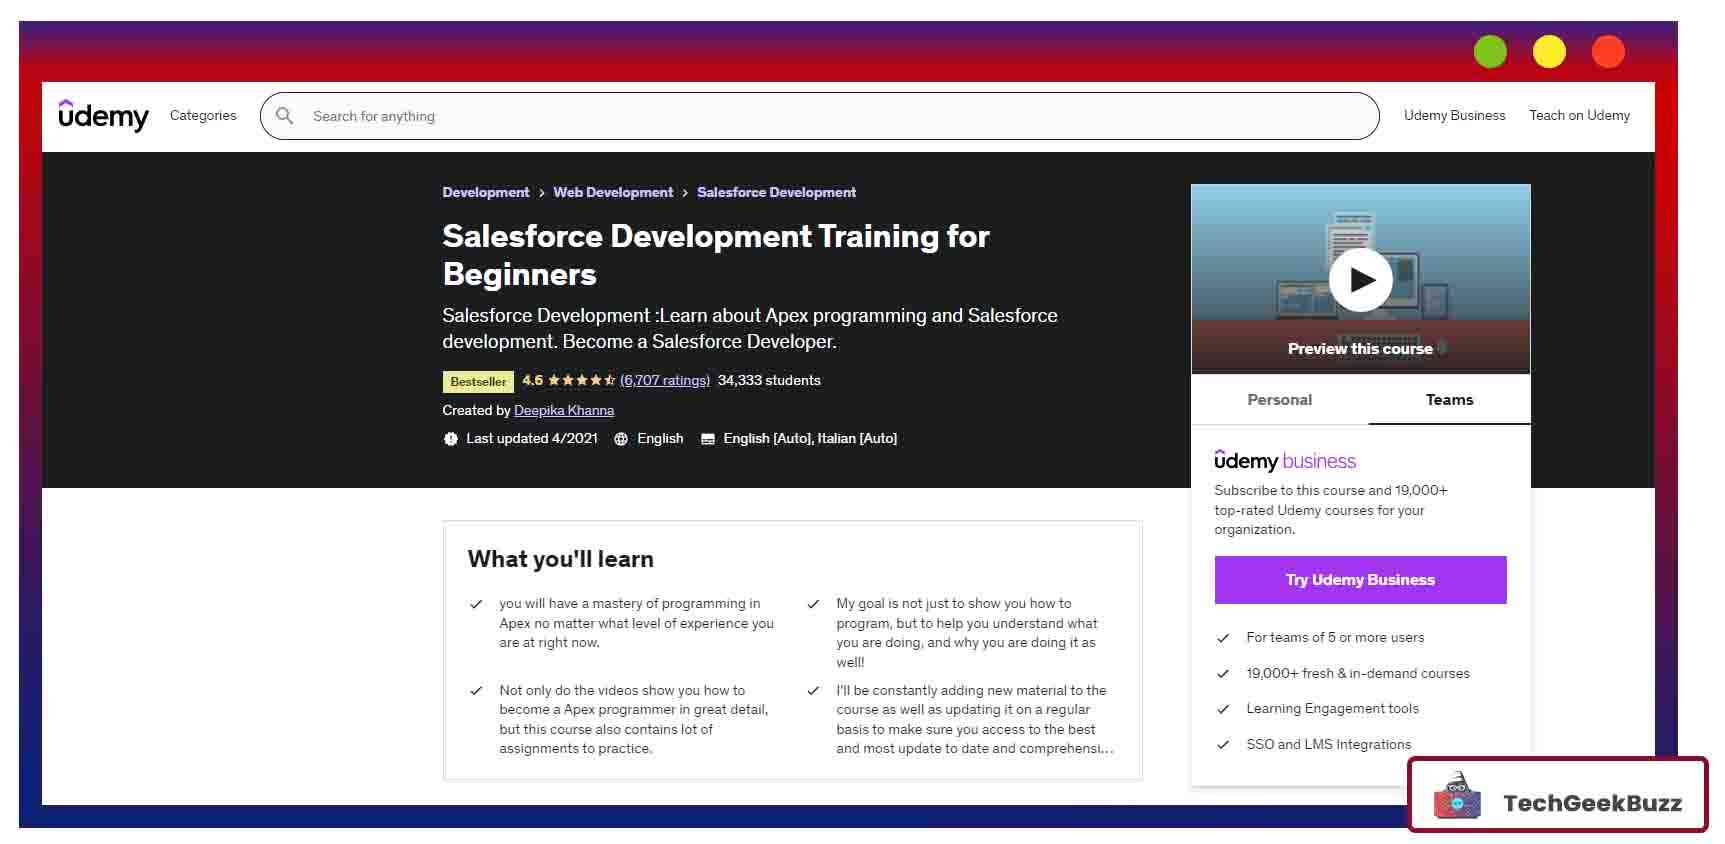 Salesforce Development Training for Beginners